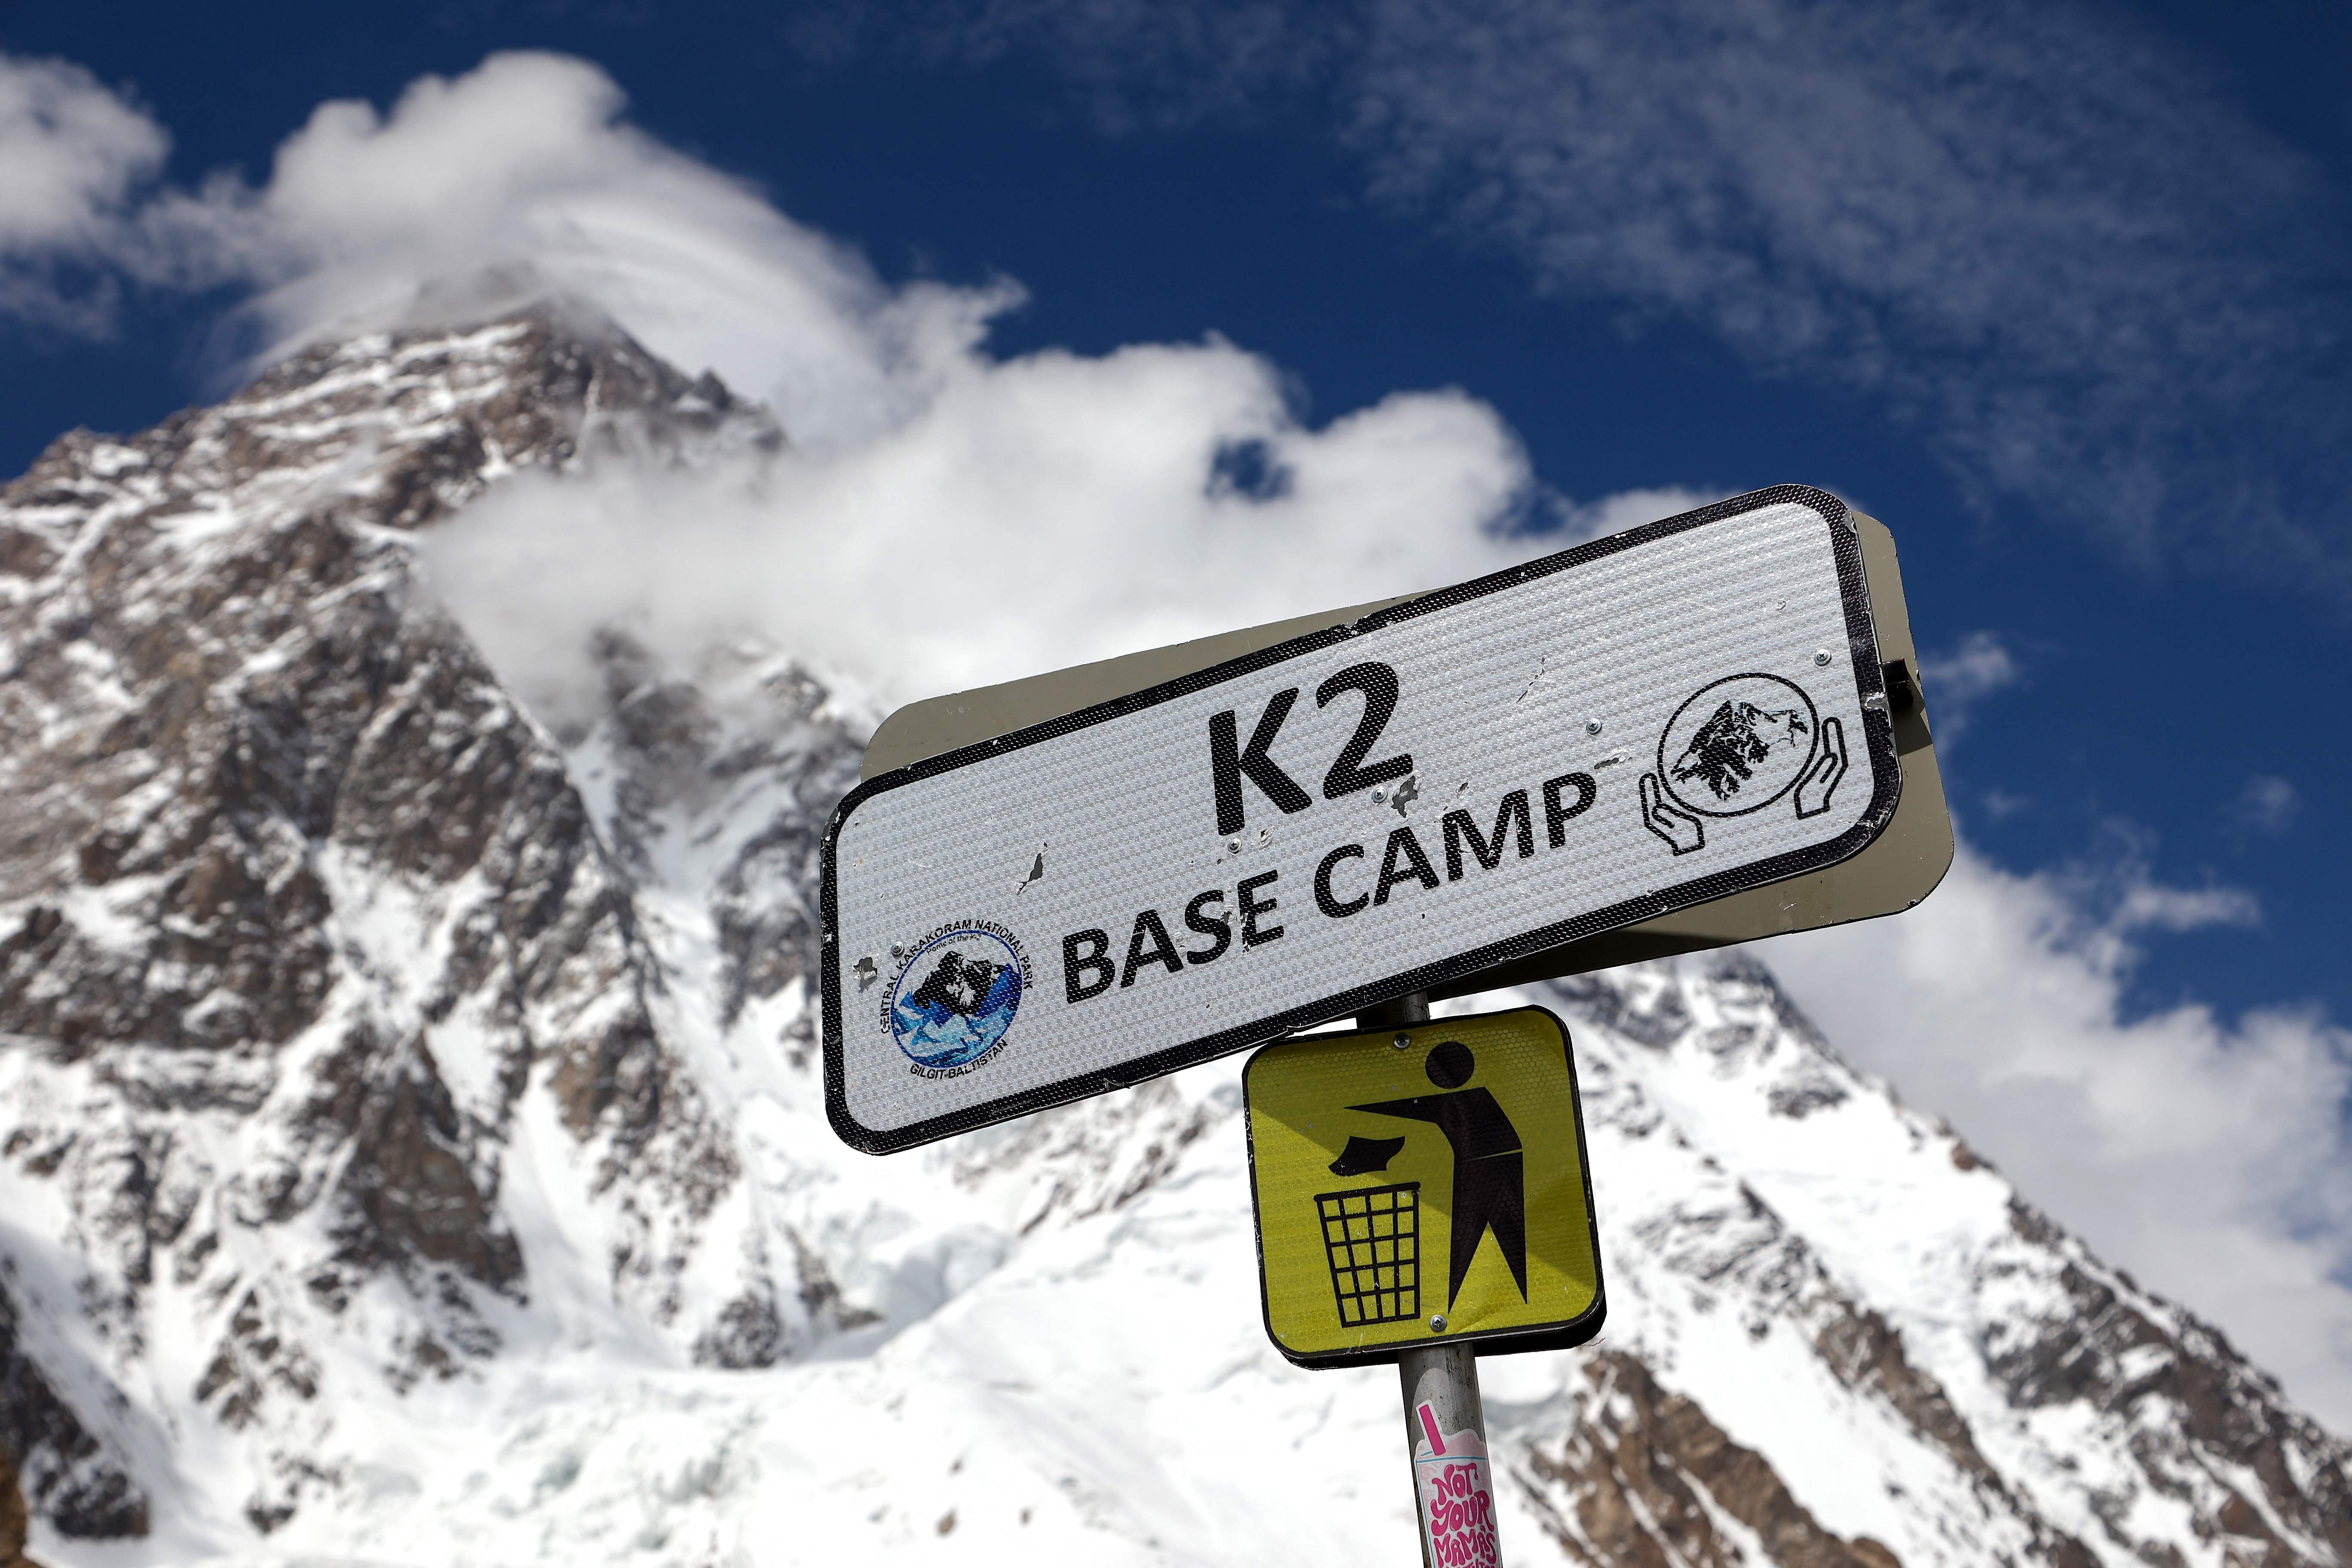 K2 is the world’s second-highest peak